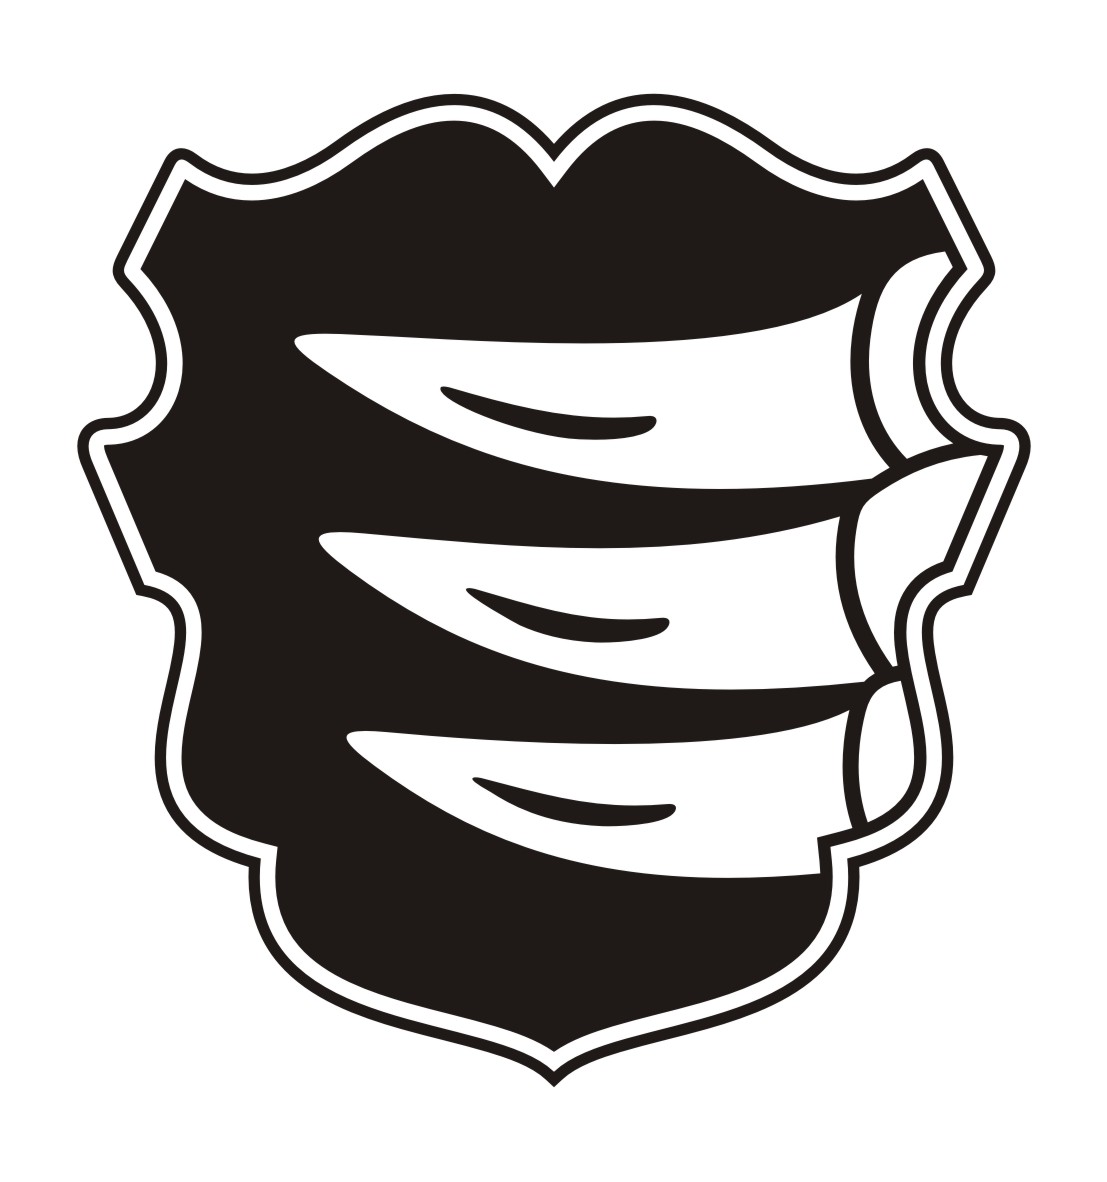 Fundatia Bathori Istvan logo